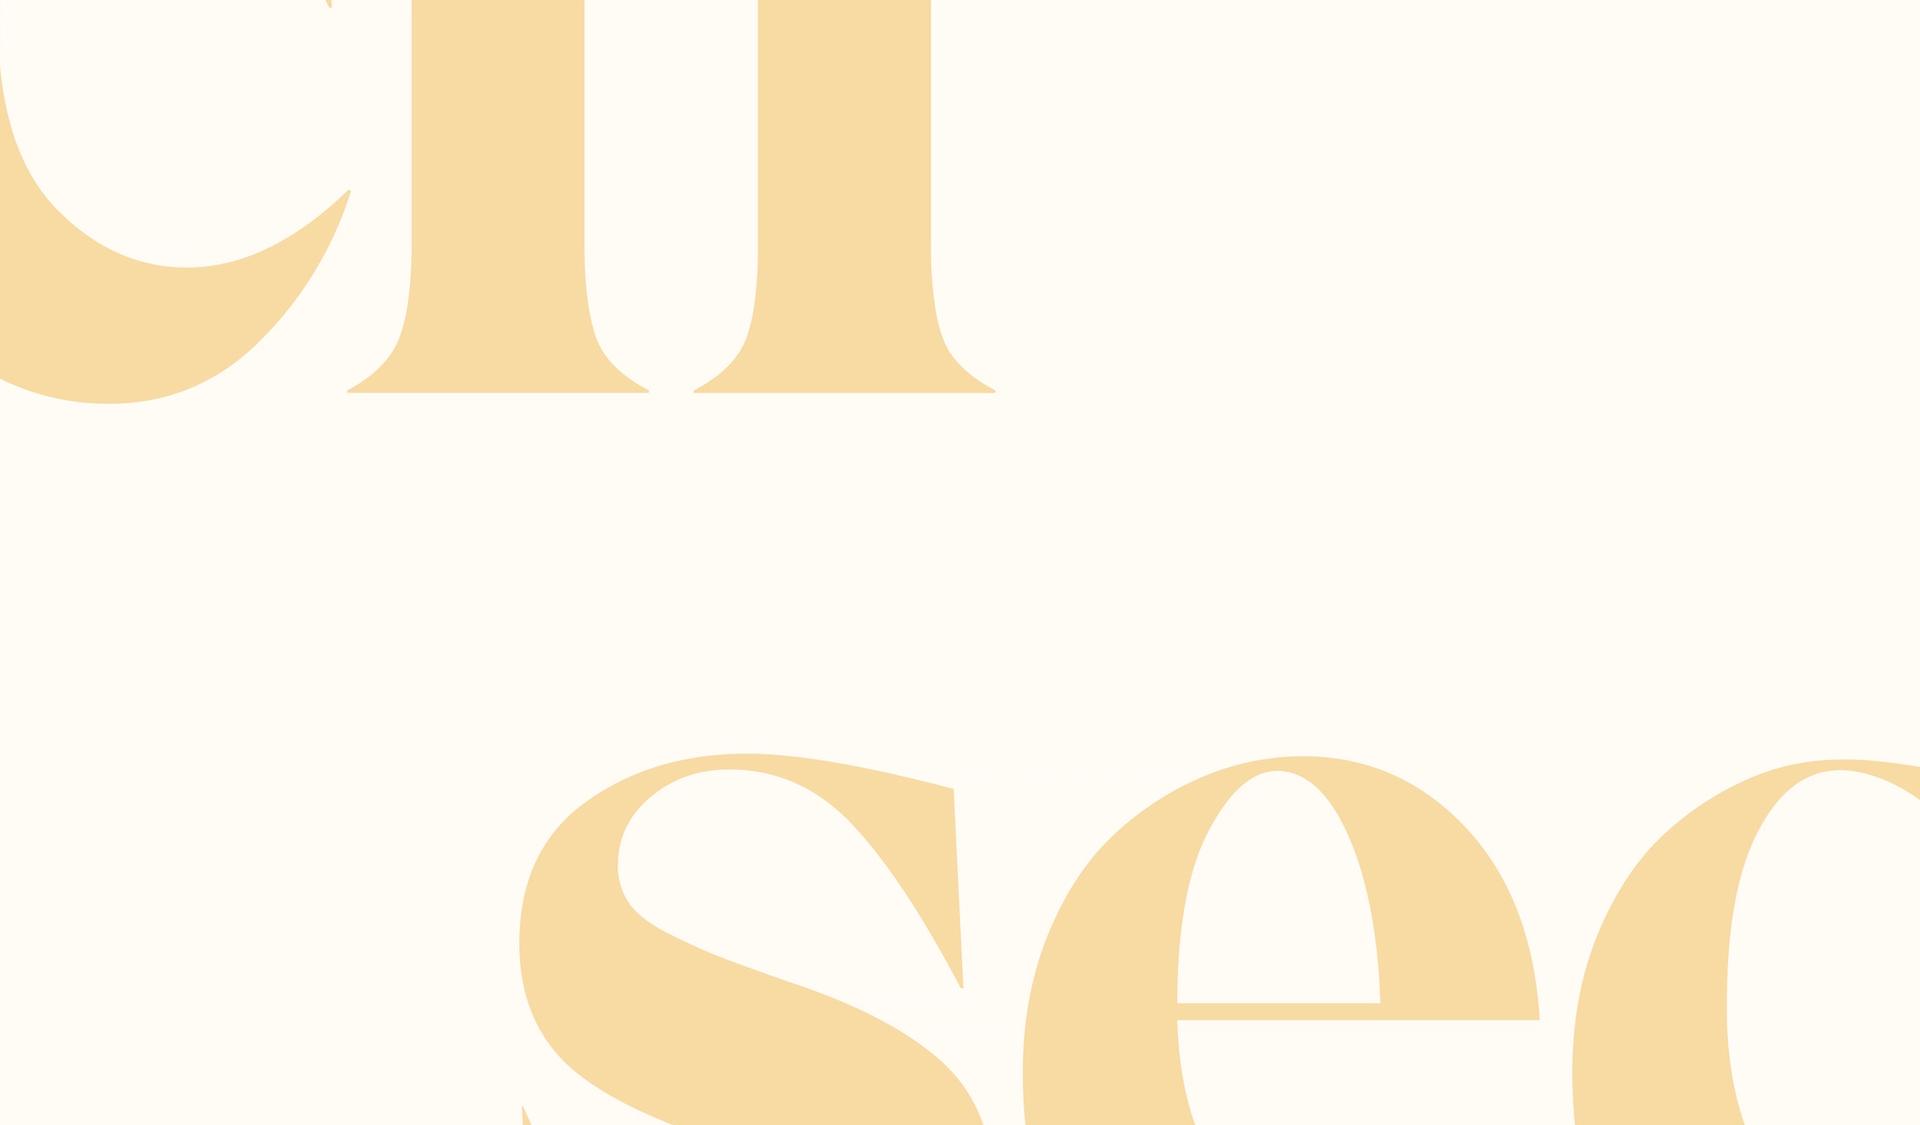 Abstract Secfi logo graphic